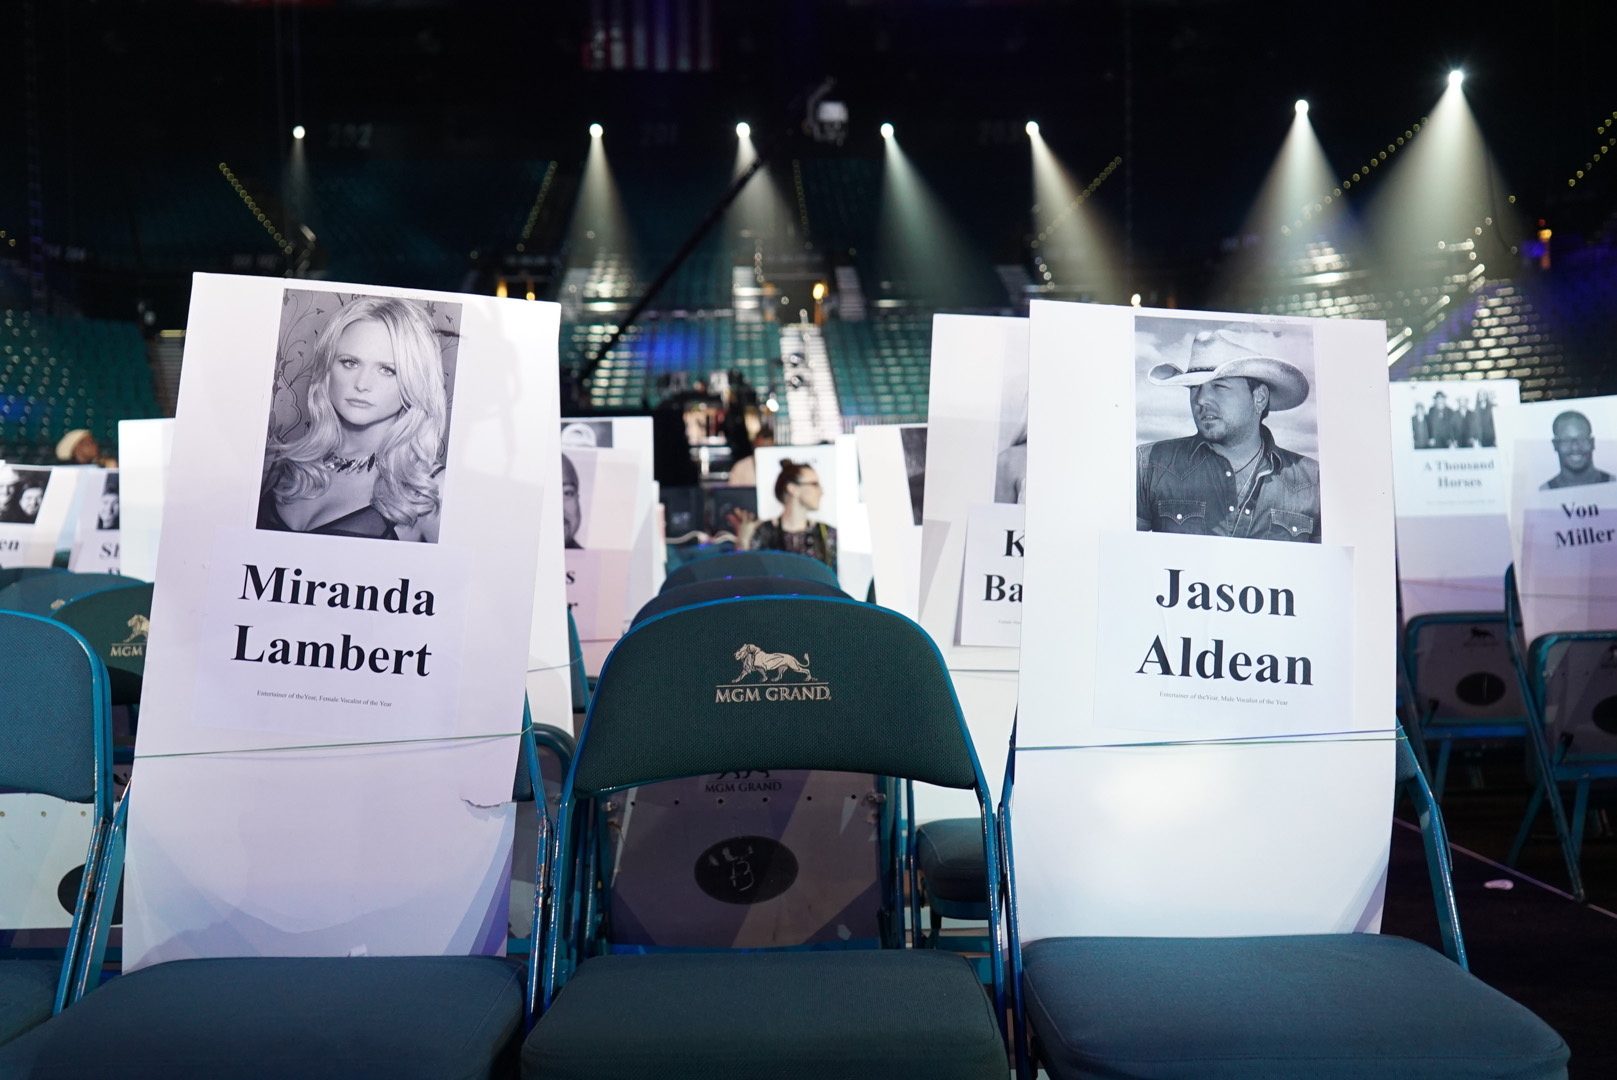 Miranda Lambert and Jason Aldean's seats are marked for the memorable night.